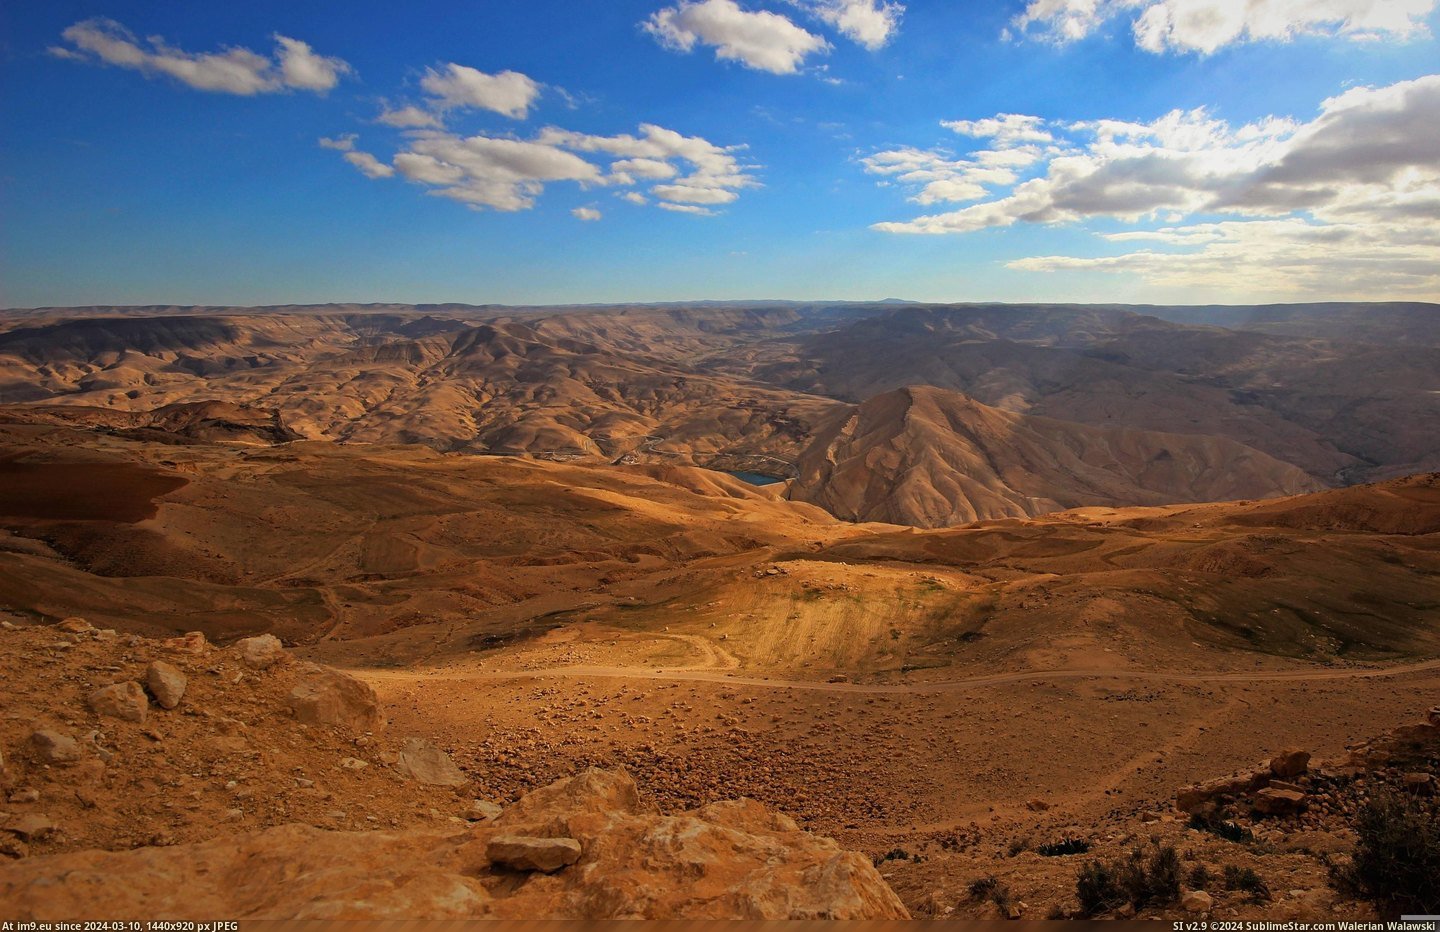 #Great #Highway #Jordan #King [Earthporn] Great views guaranteed when taking the King's Highway, Jordan  [3486x2239] Pic. (Bild von album My r/EARTHPORN favs))